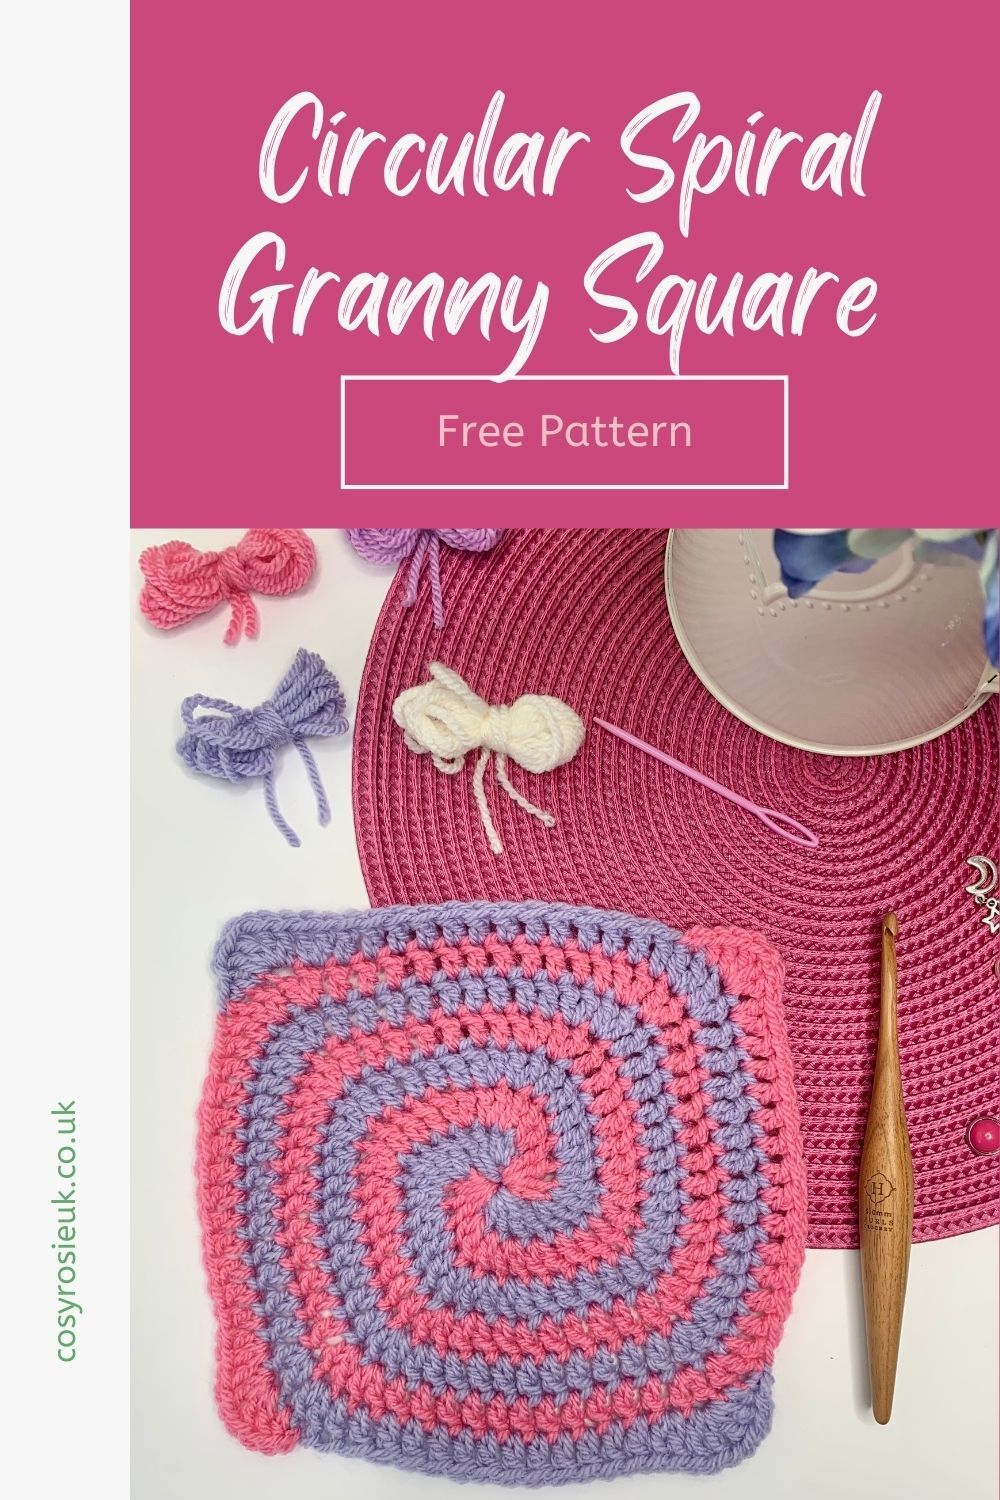 Circular Spiral Free Granny Square Pattern